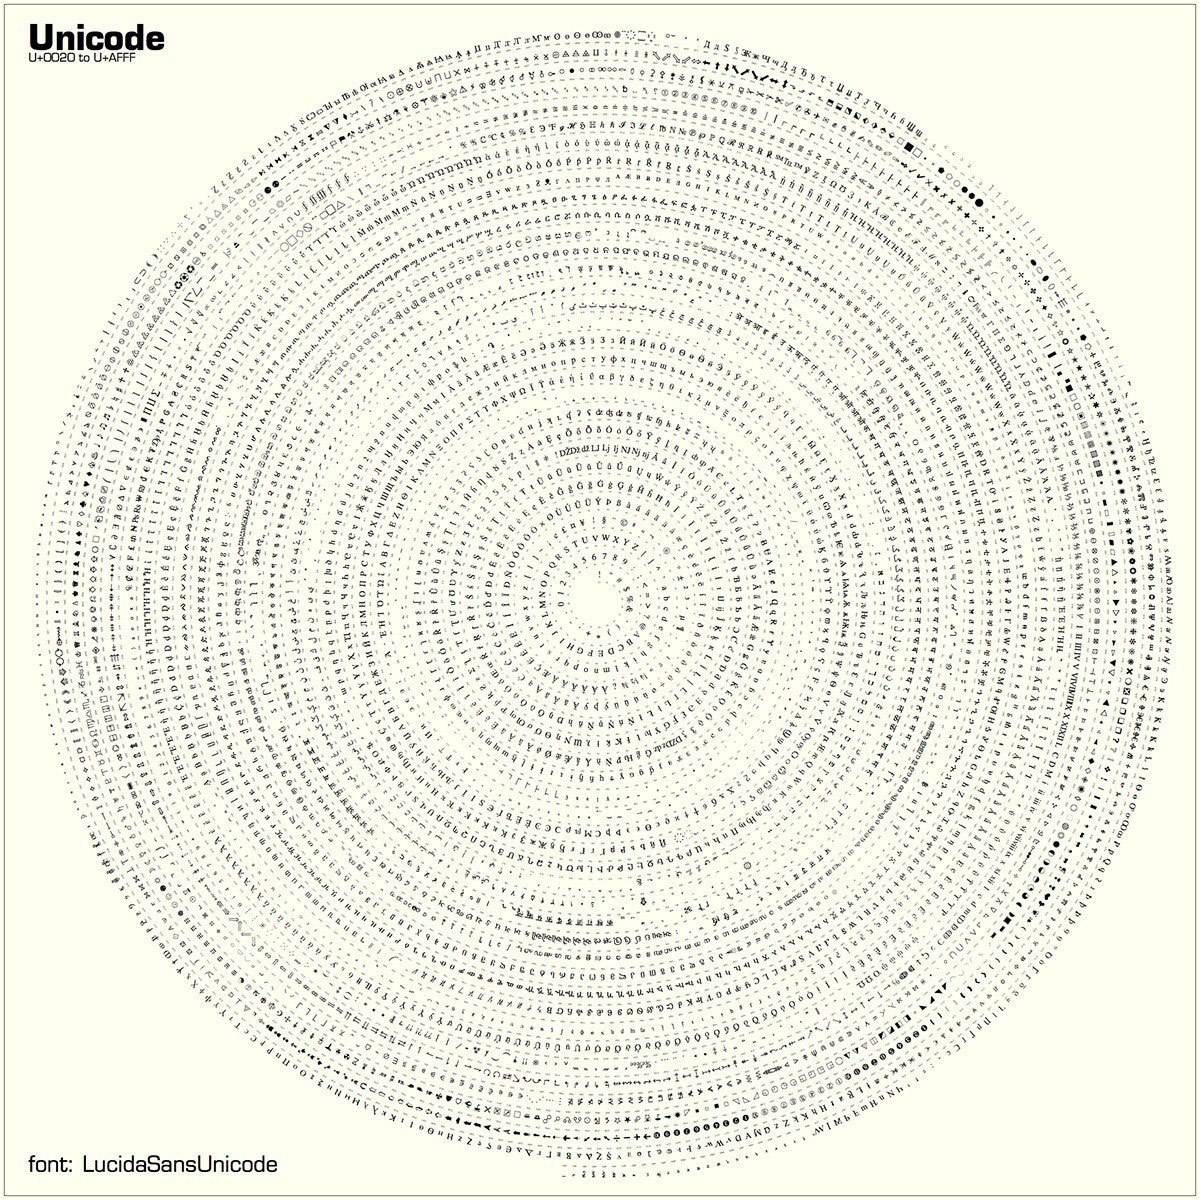 Unicode in a Spiral